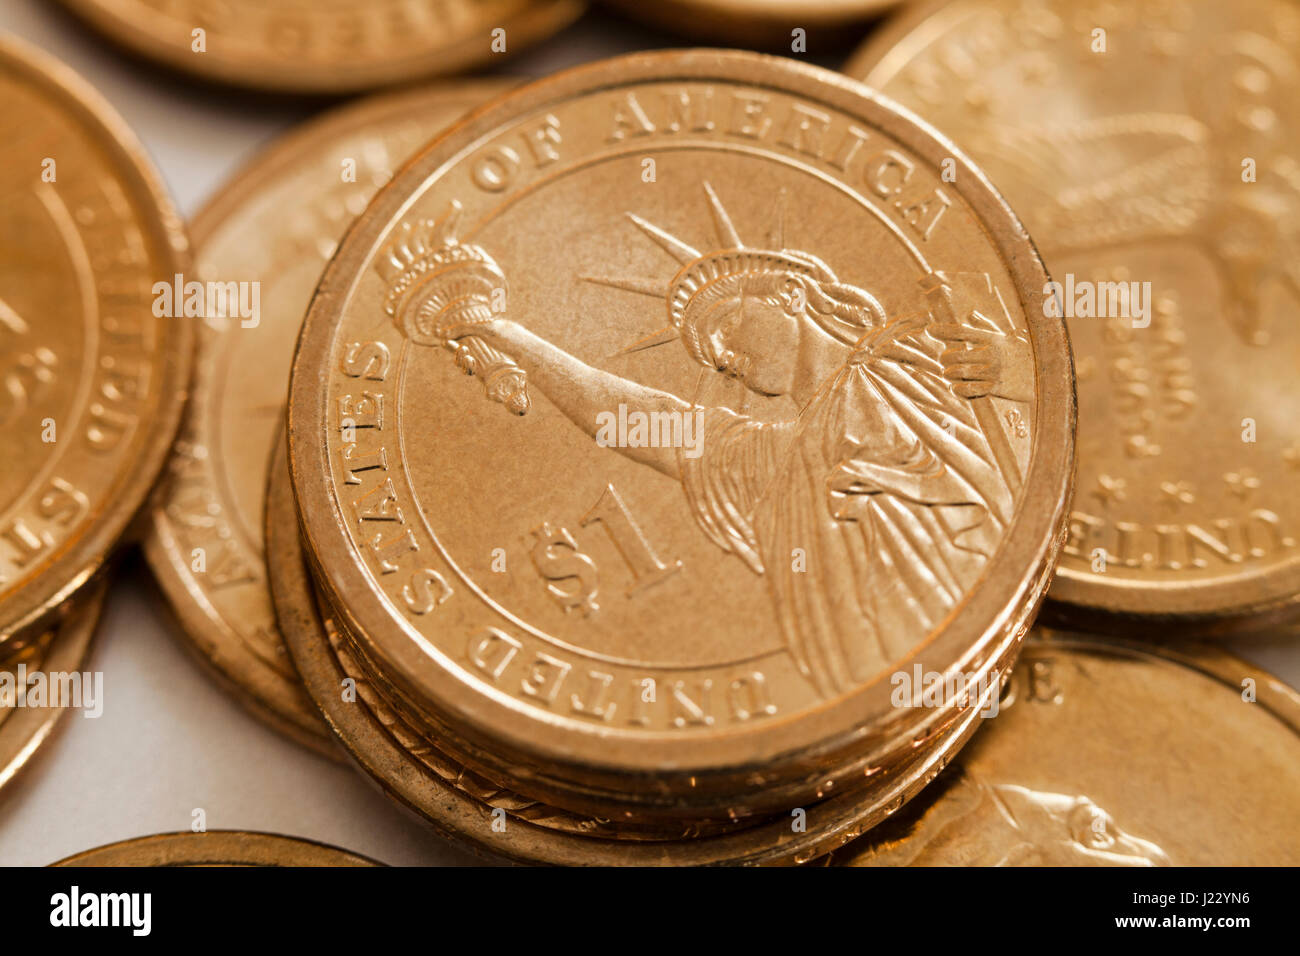 Monedas de 1 dolar fotografías e imágenes de alta resolución - Alamy